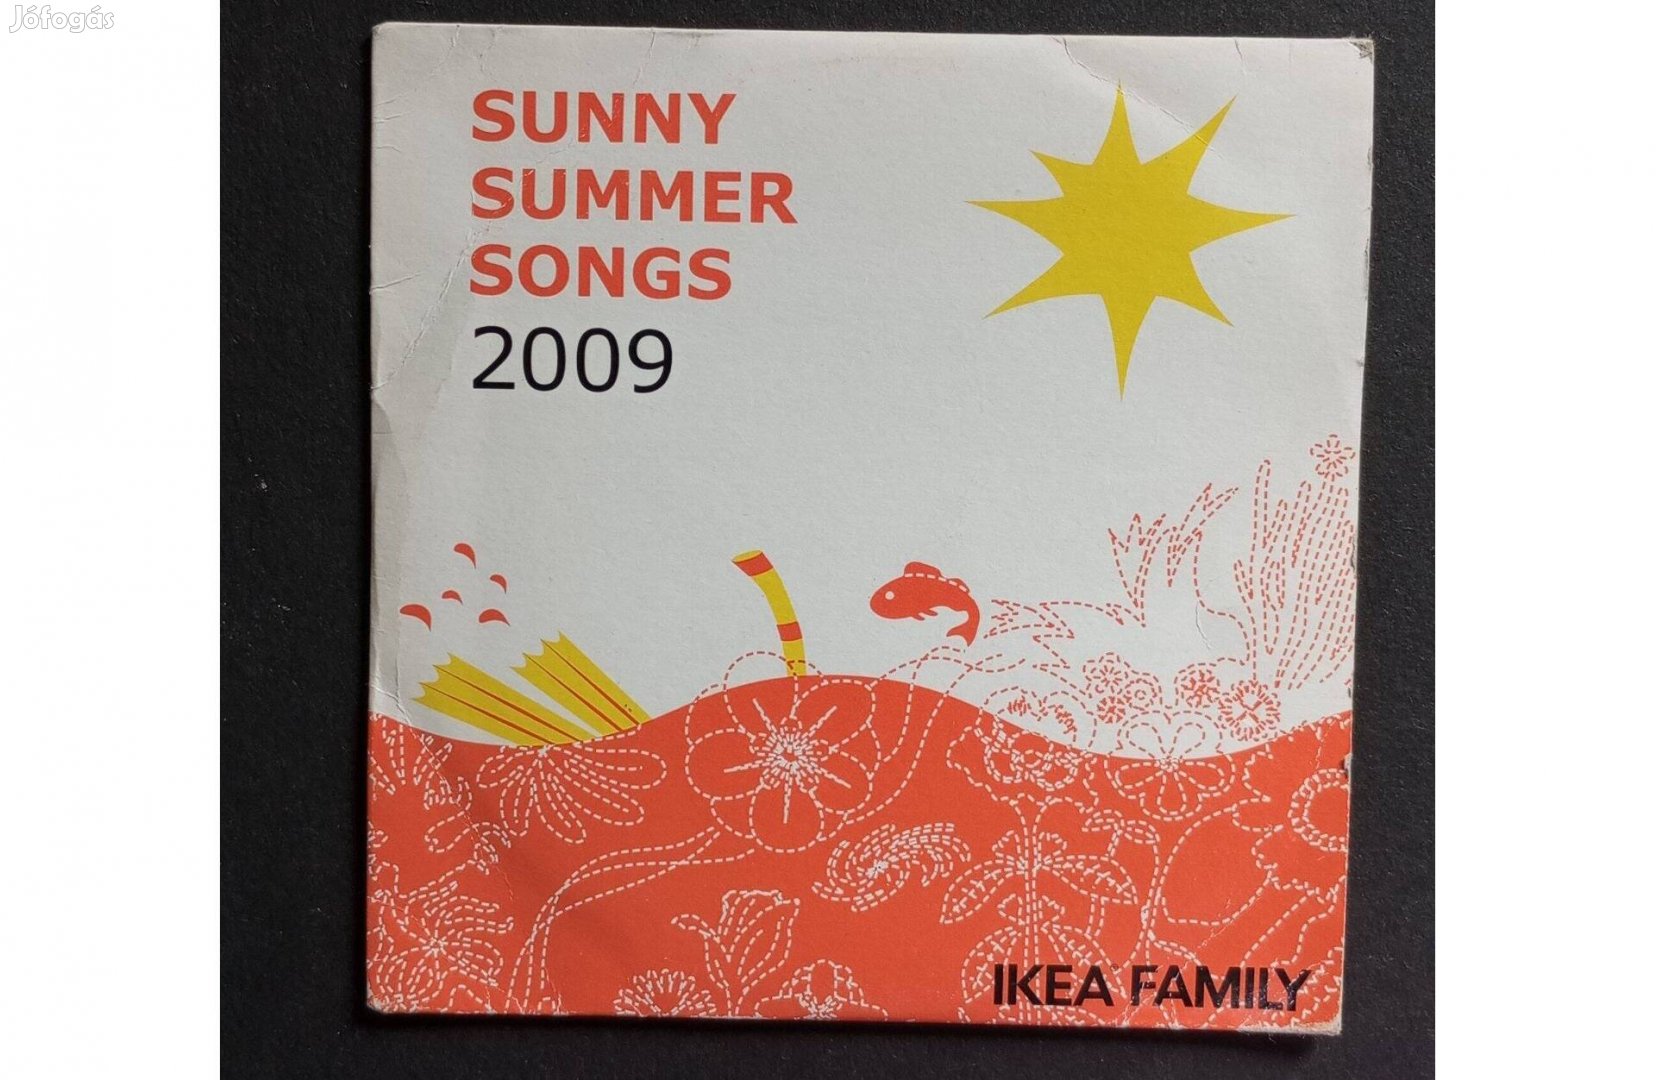 IKEA FAMILY 2009 külföldi slágerei ritka CD - Sunny Summer Songs